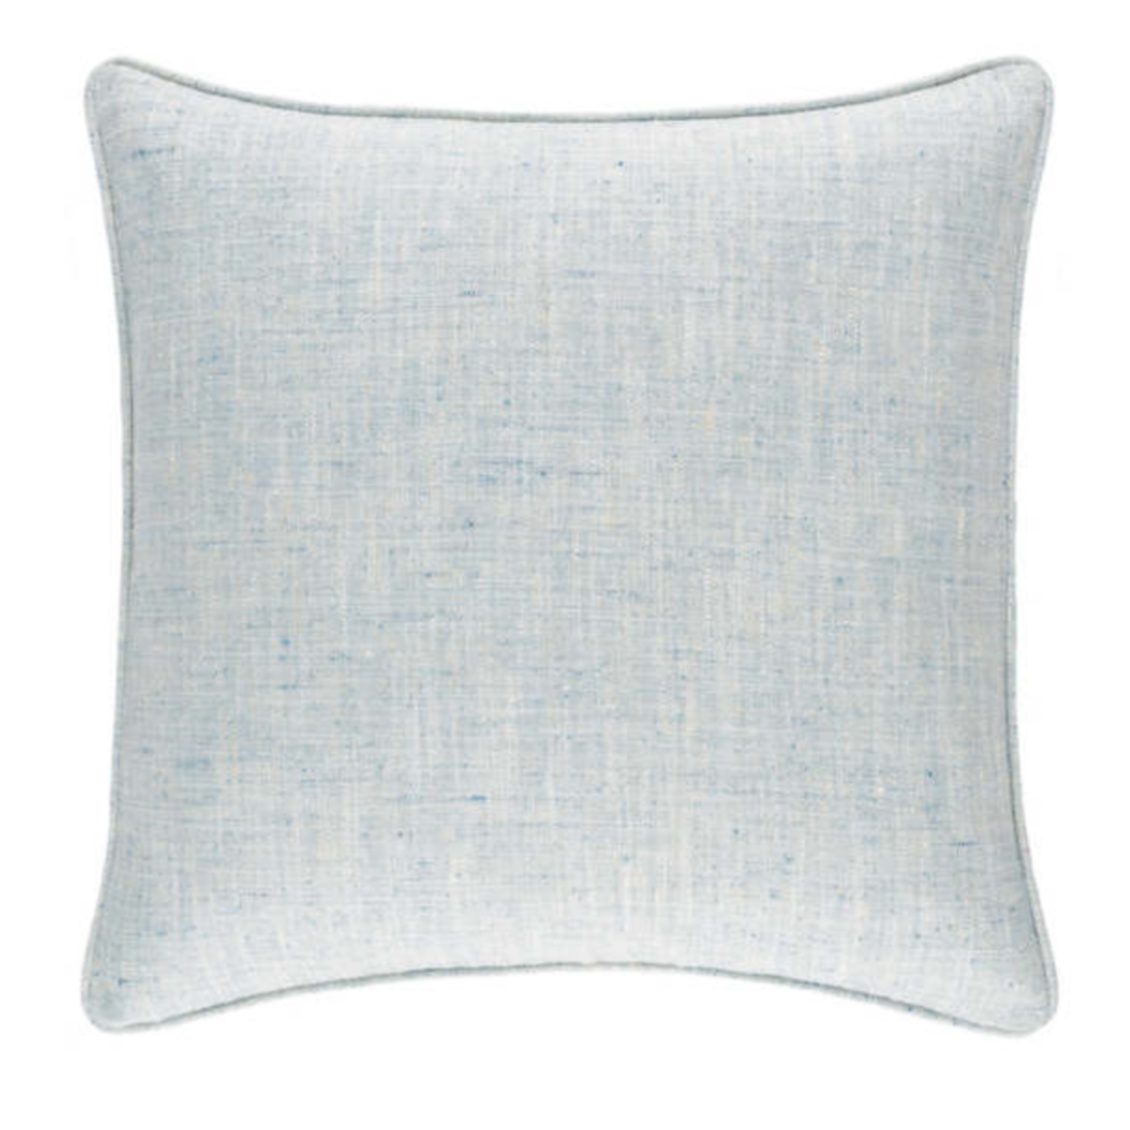 Greylock Indoor / Outdoor Decorative Pillow - Soft Blue, 22" x 22"